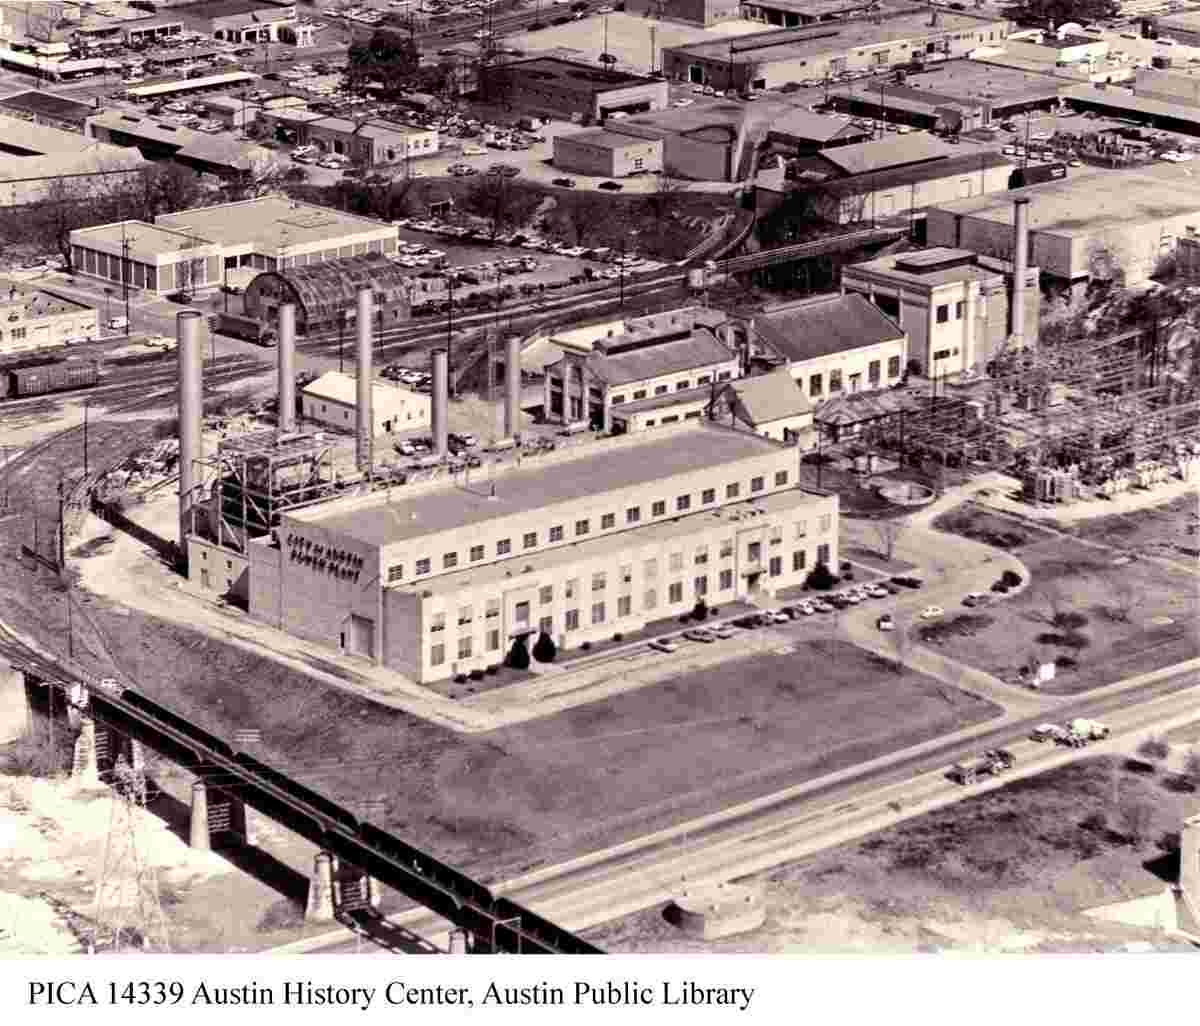 Austin. View of Seaholm Power Plant